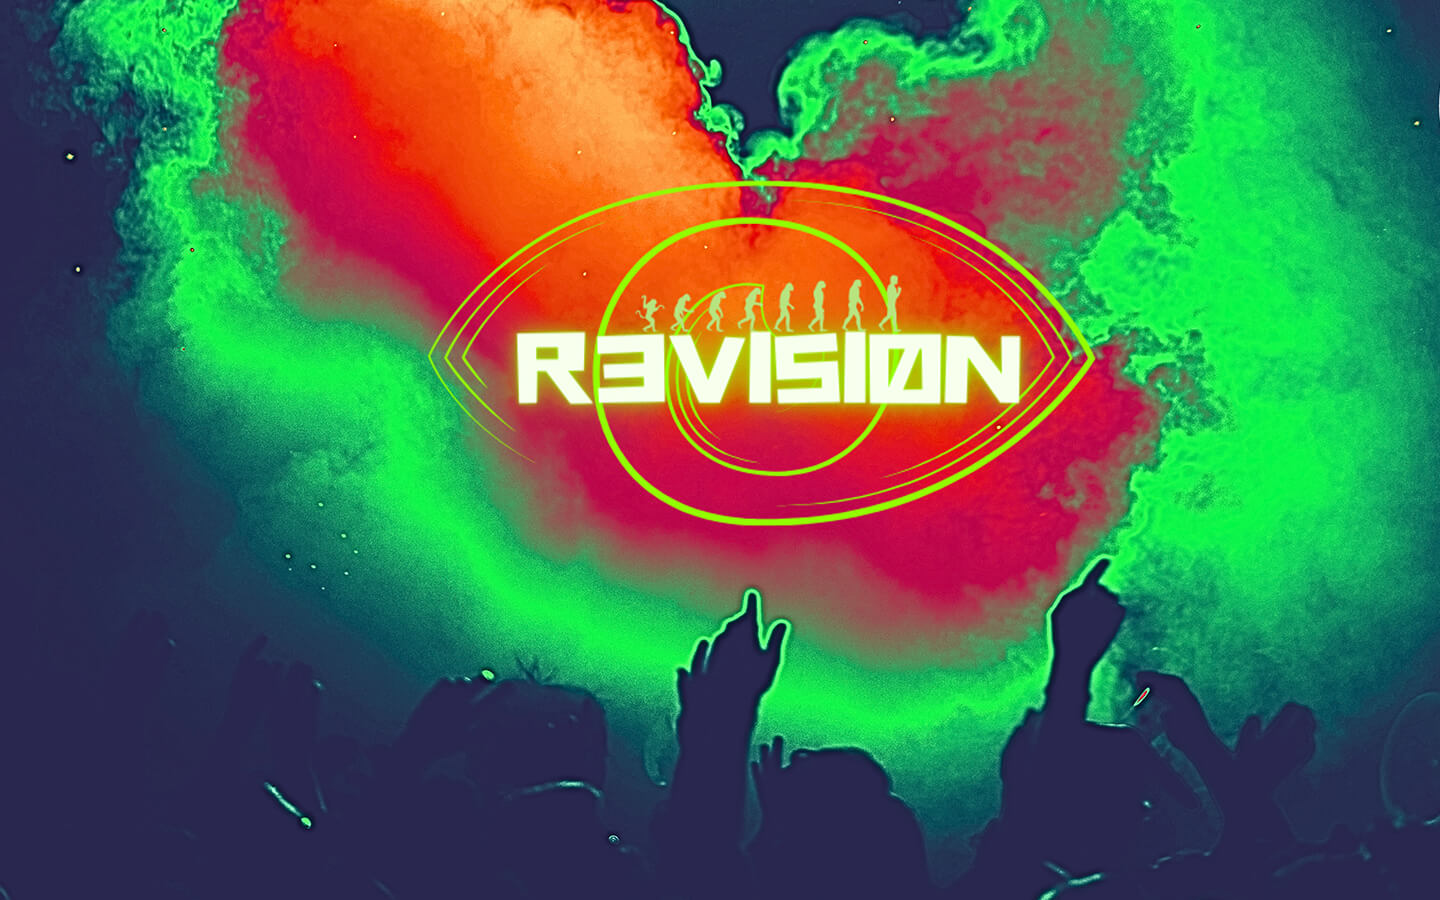 R3vision